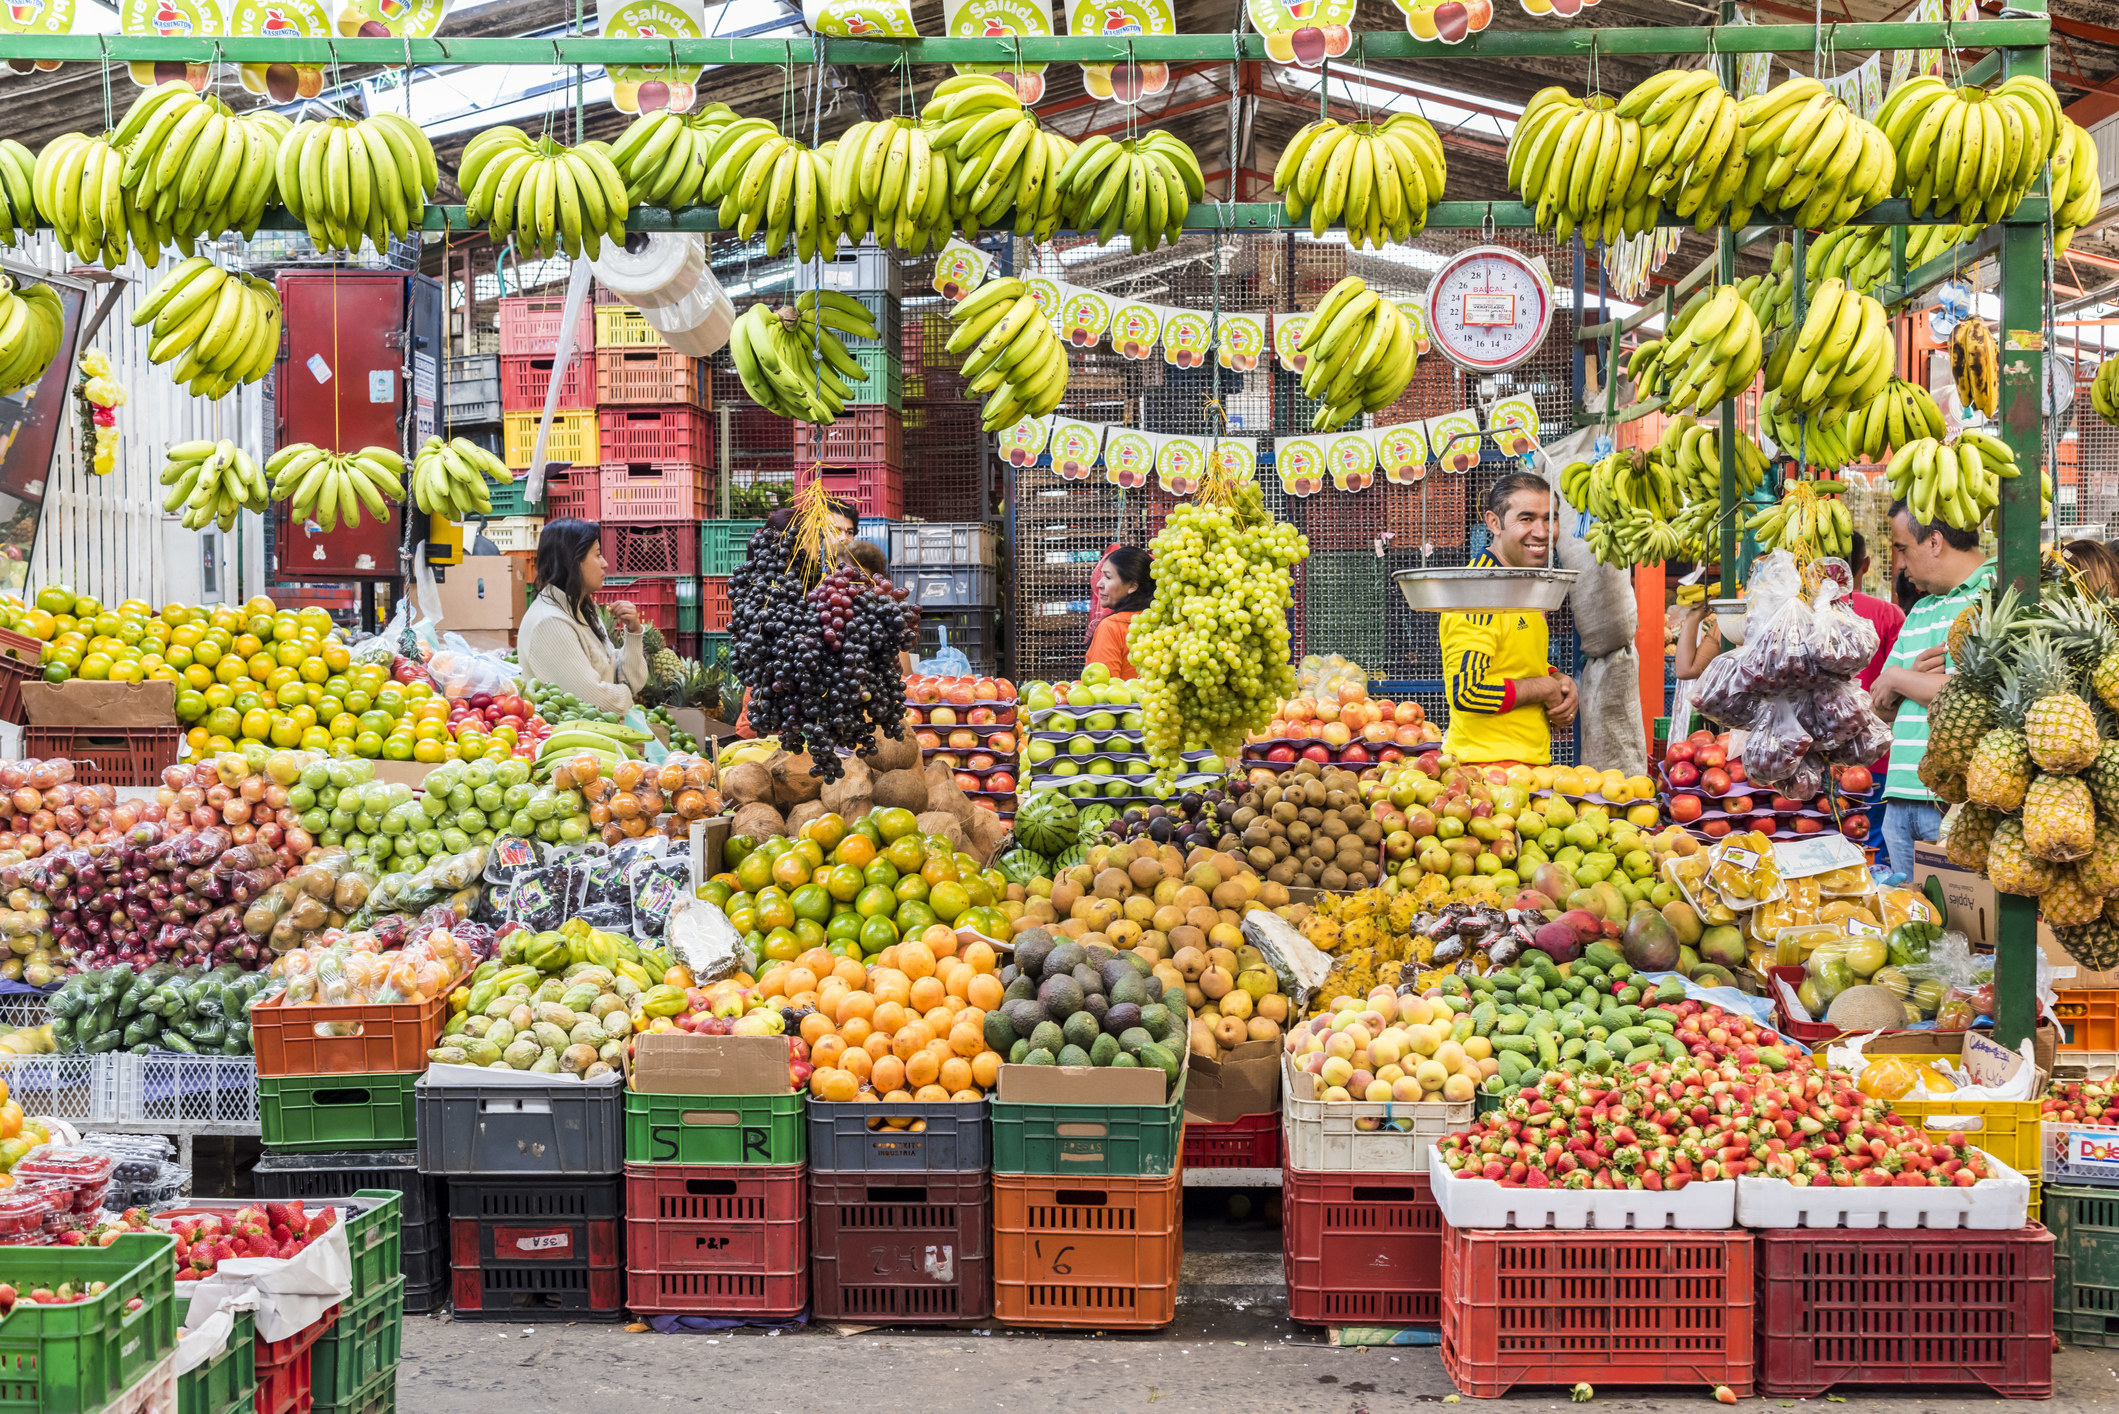 A fruit market in Colombia